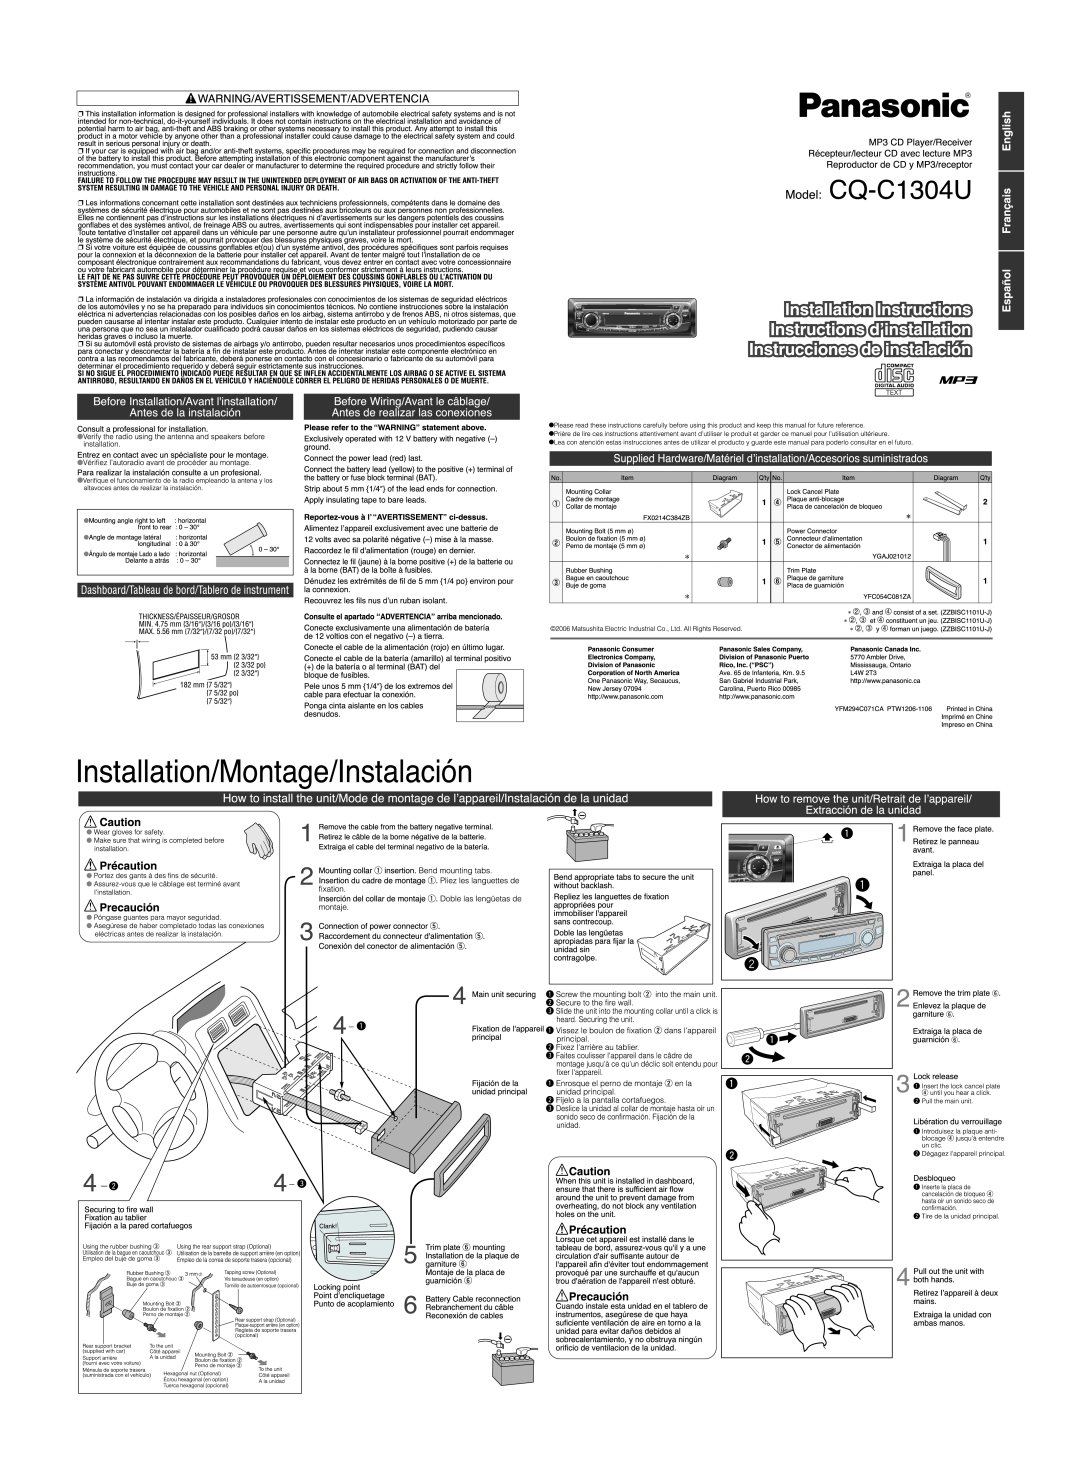 Panasonic CQ-C1304U specifications Repeat, Scroll, Random, Scan, Src/Pwr 